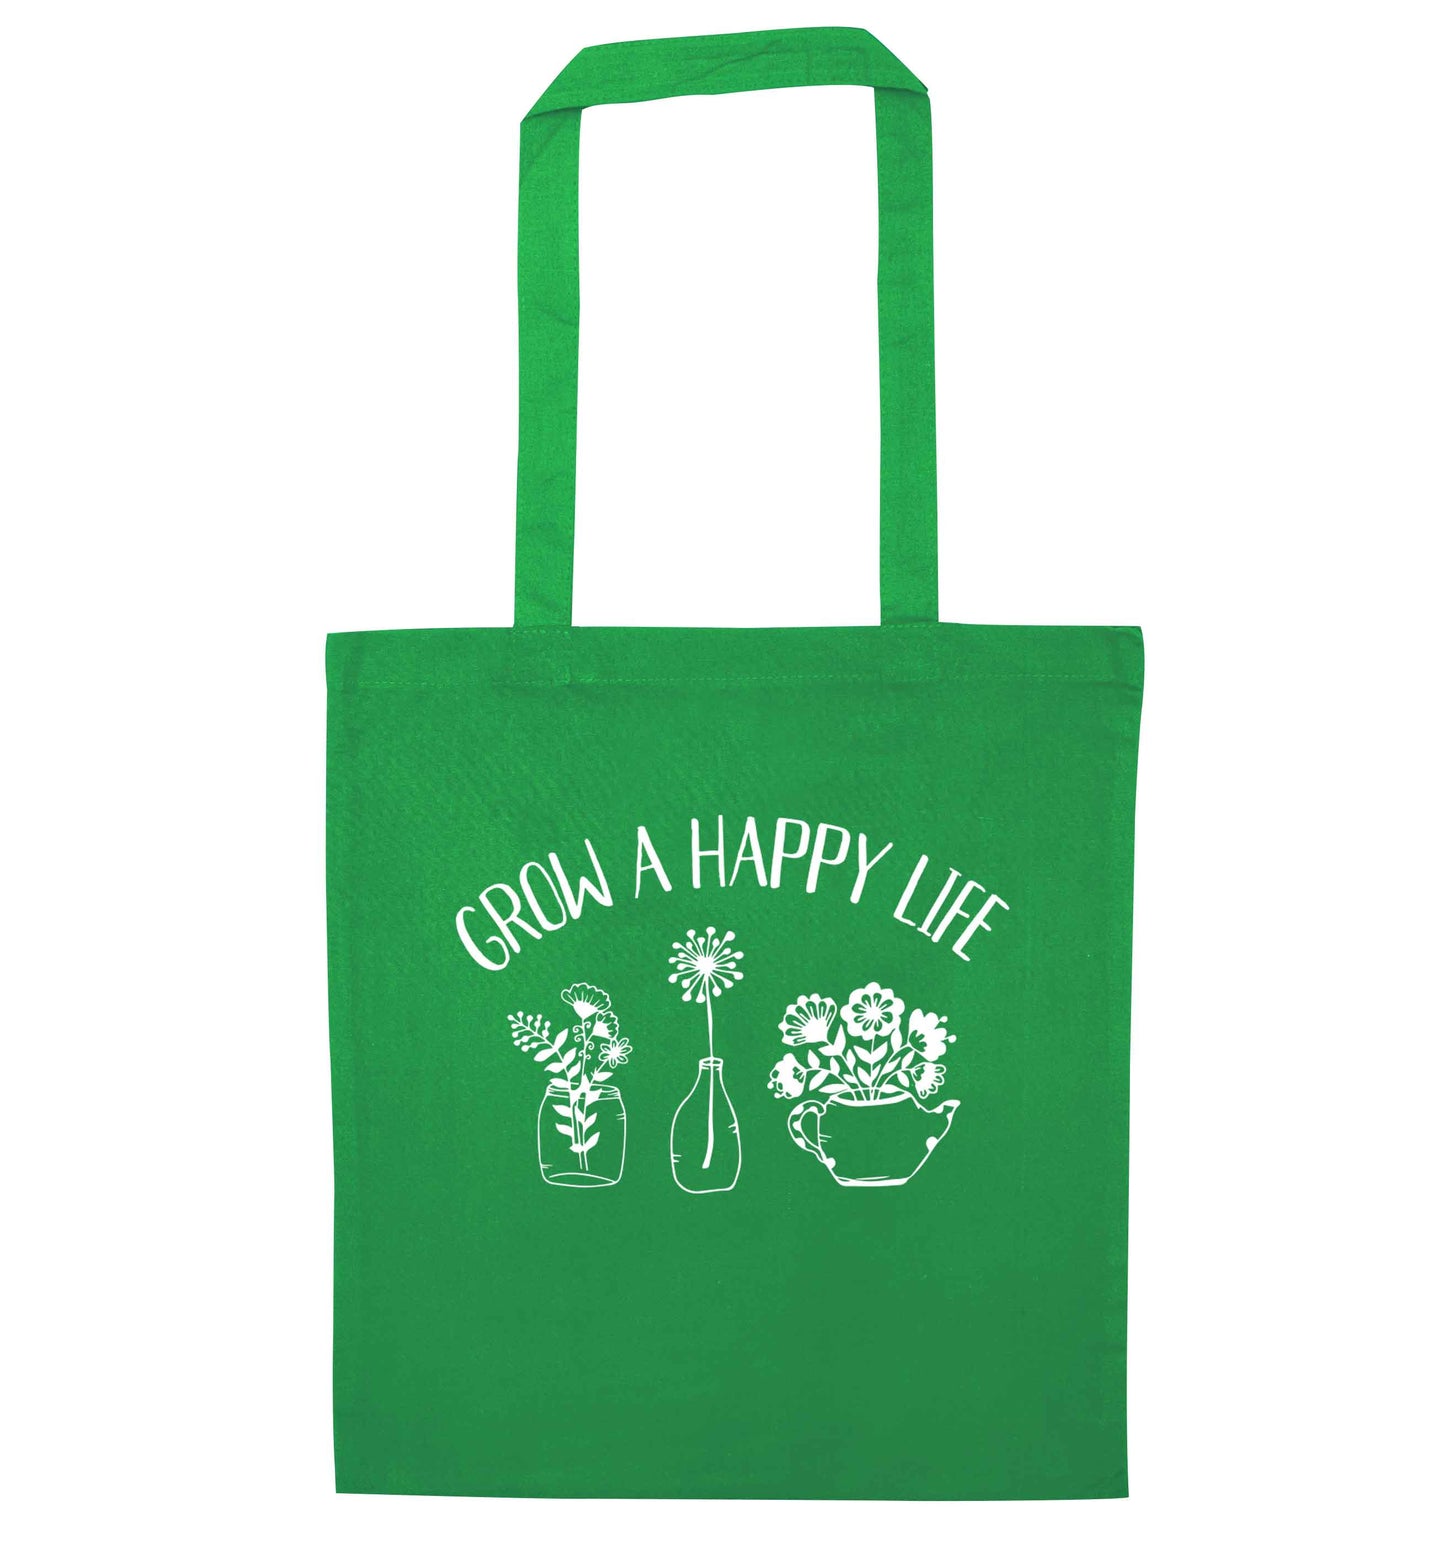 Grow a happy life green tote bag